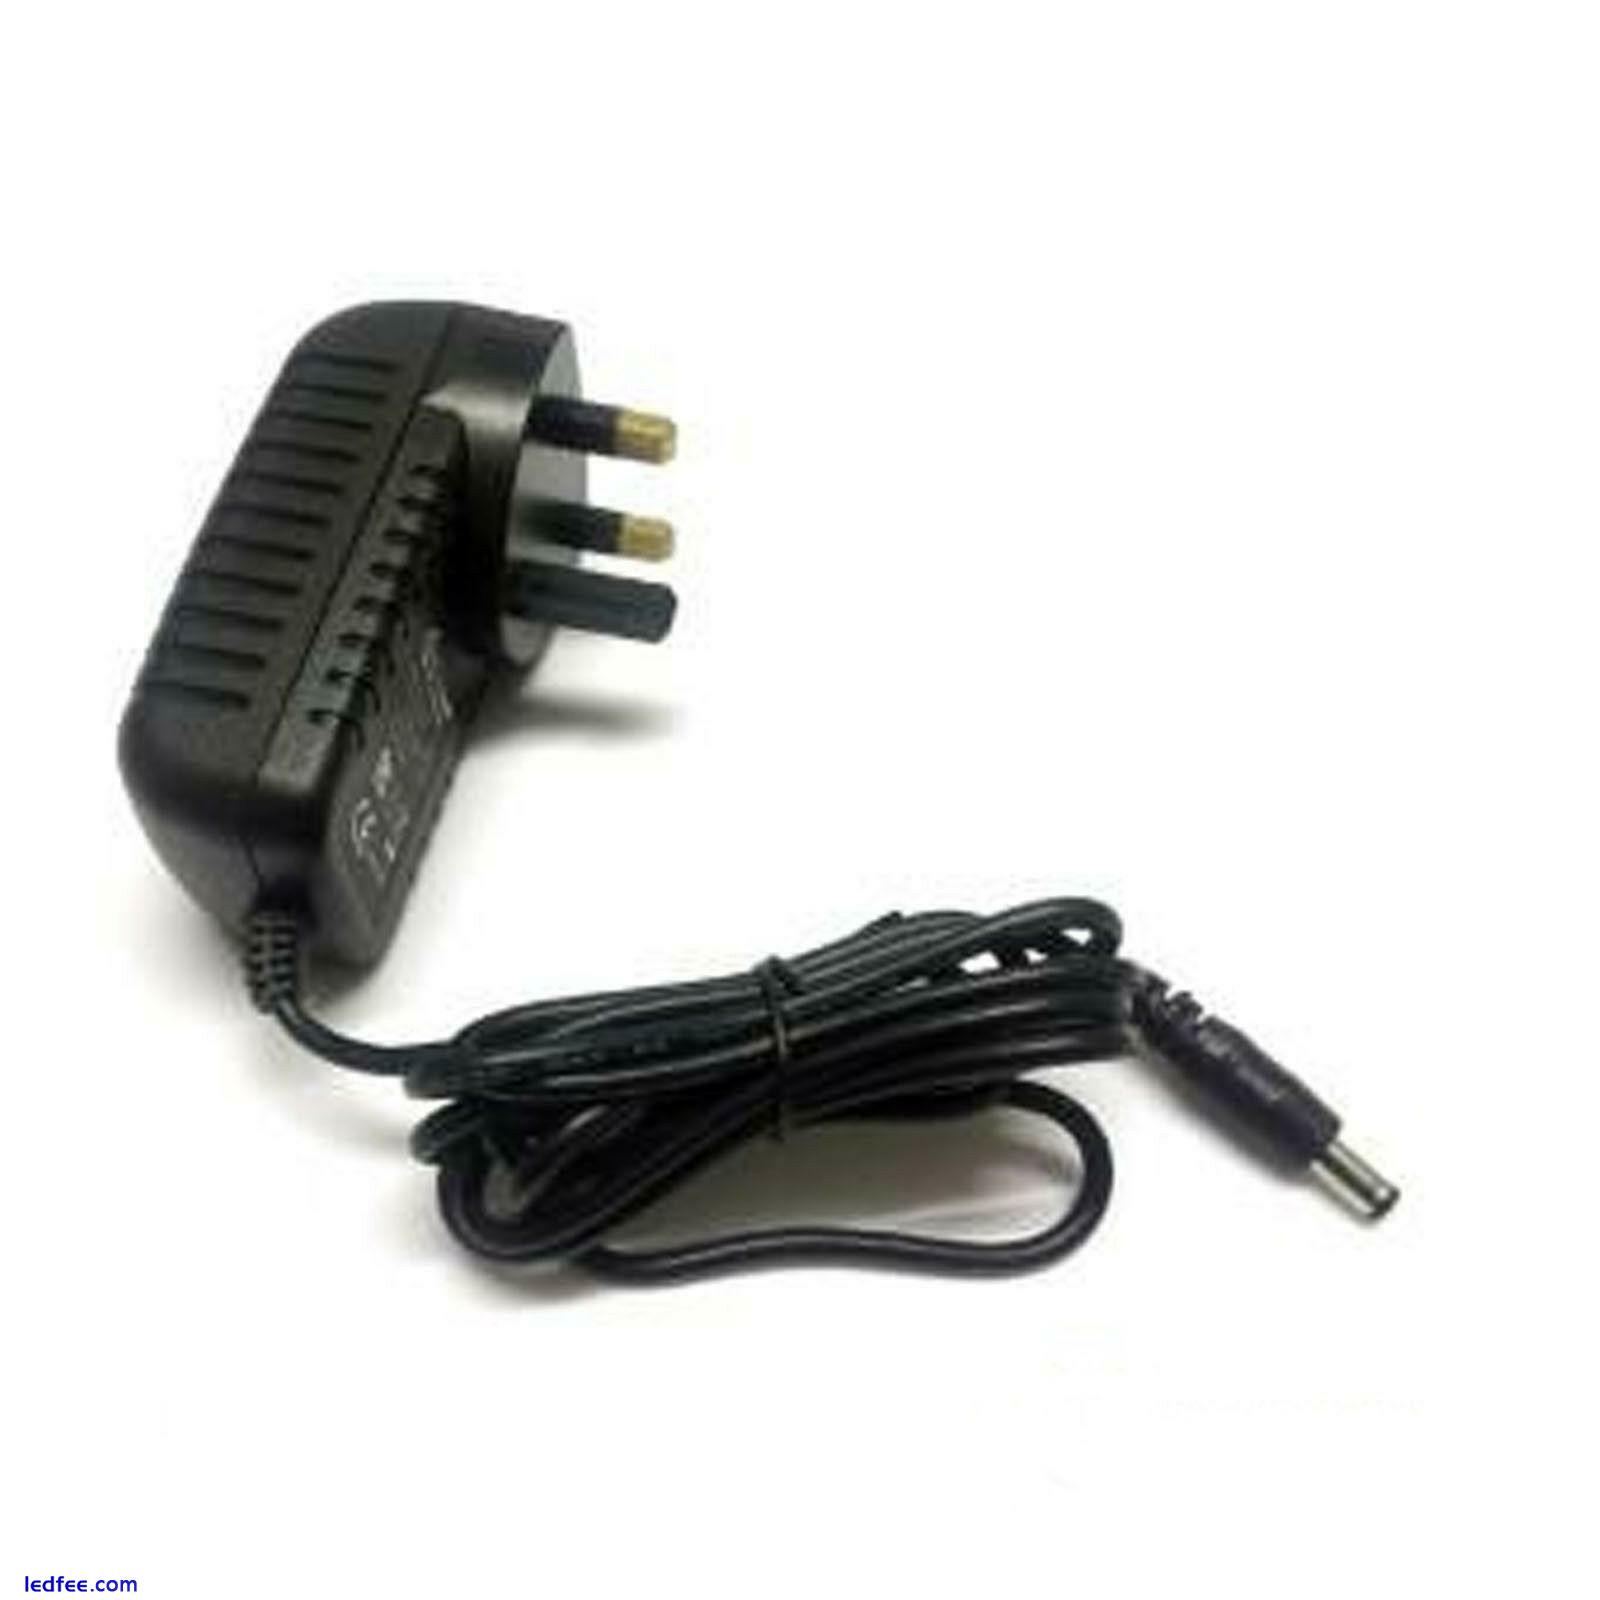 12V 1A DC UK Plug Power Supply Adaptor Transformer for LED Strips, CCTV TV. 12W 3 